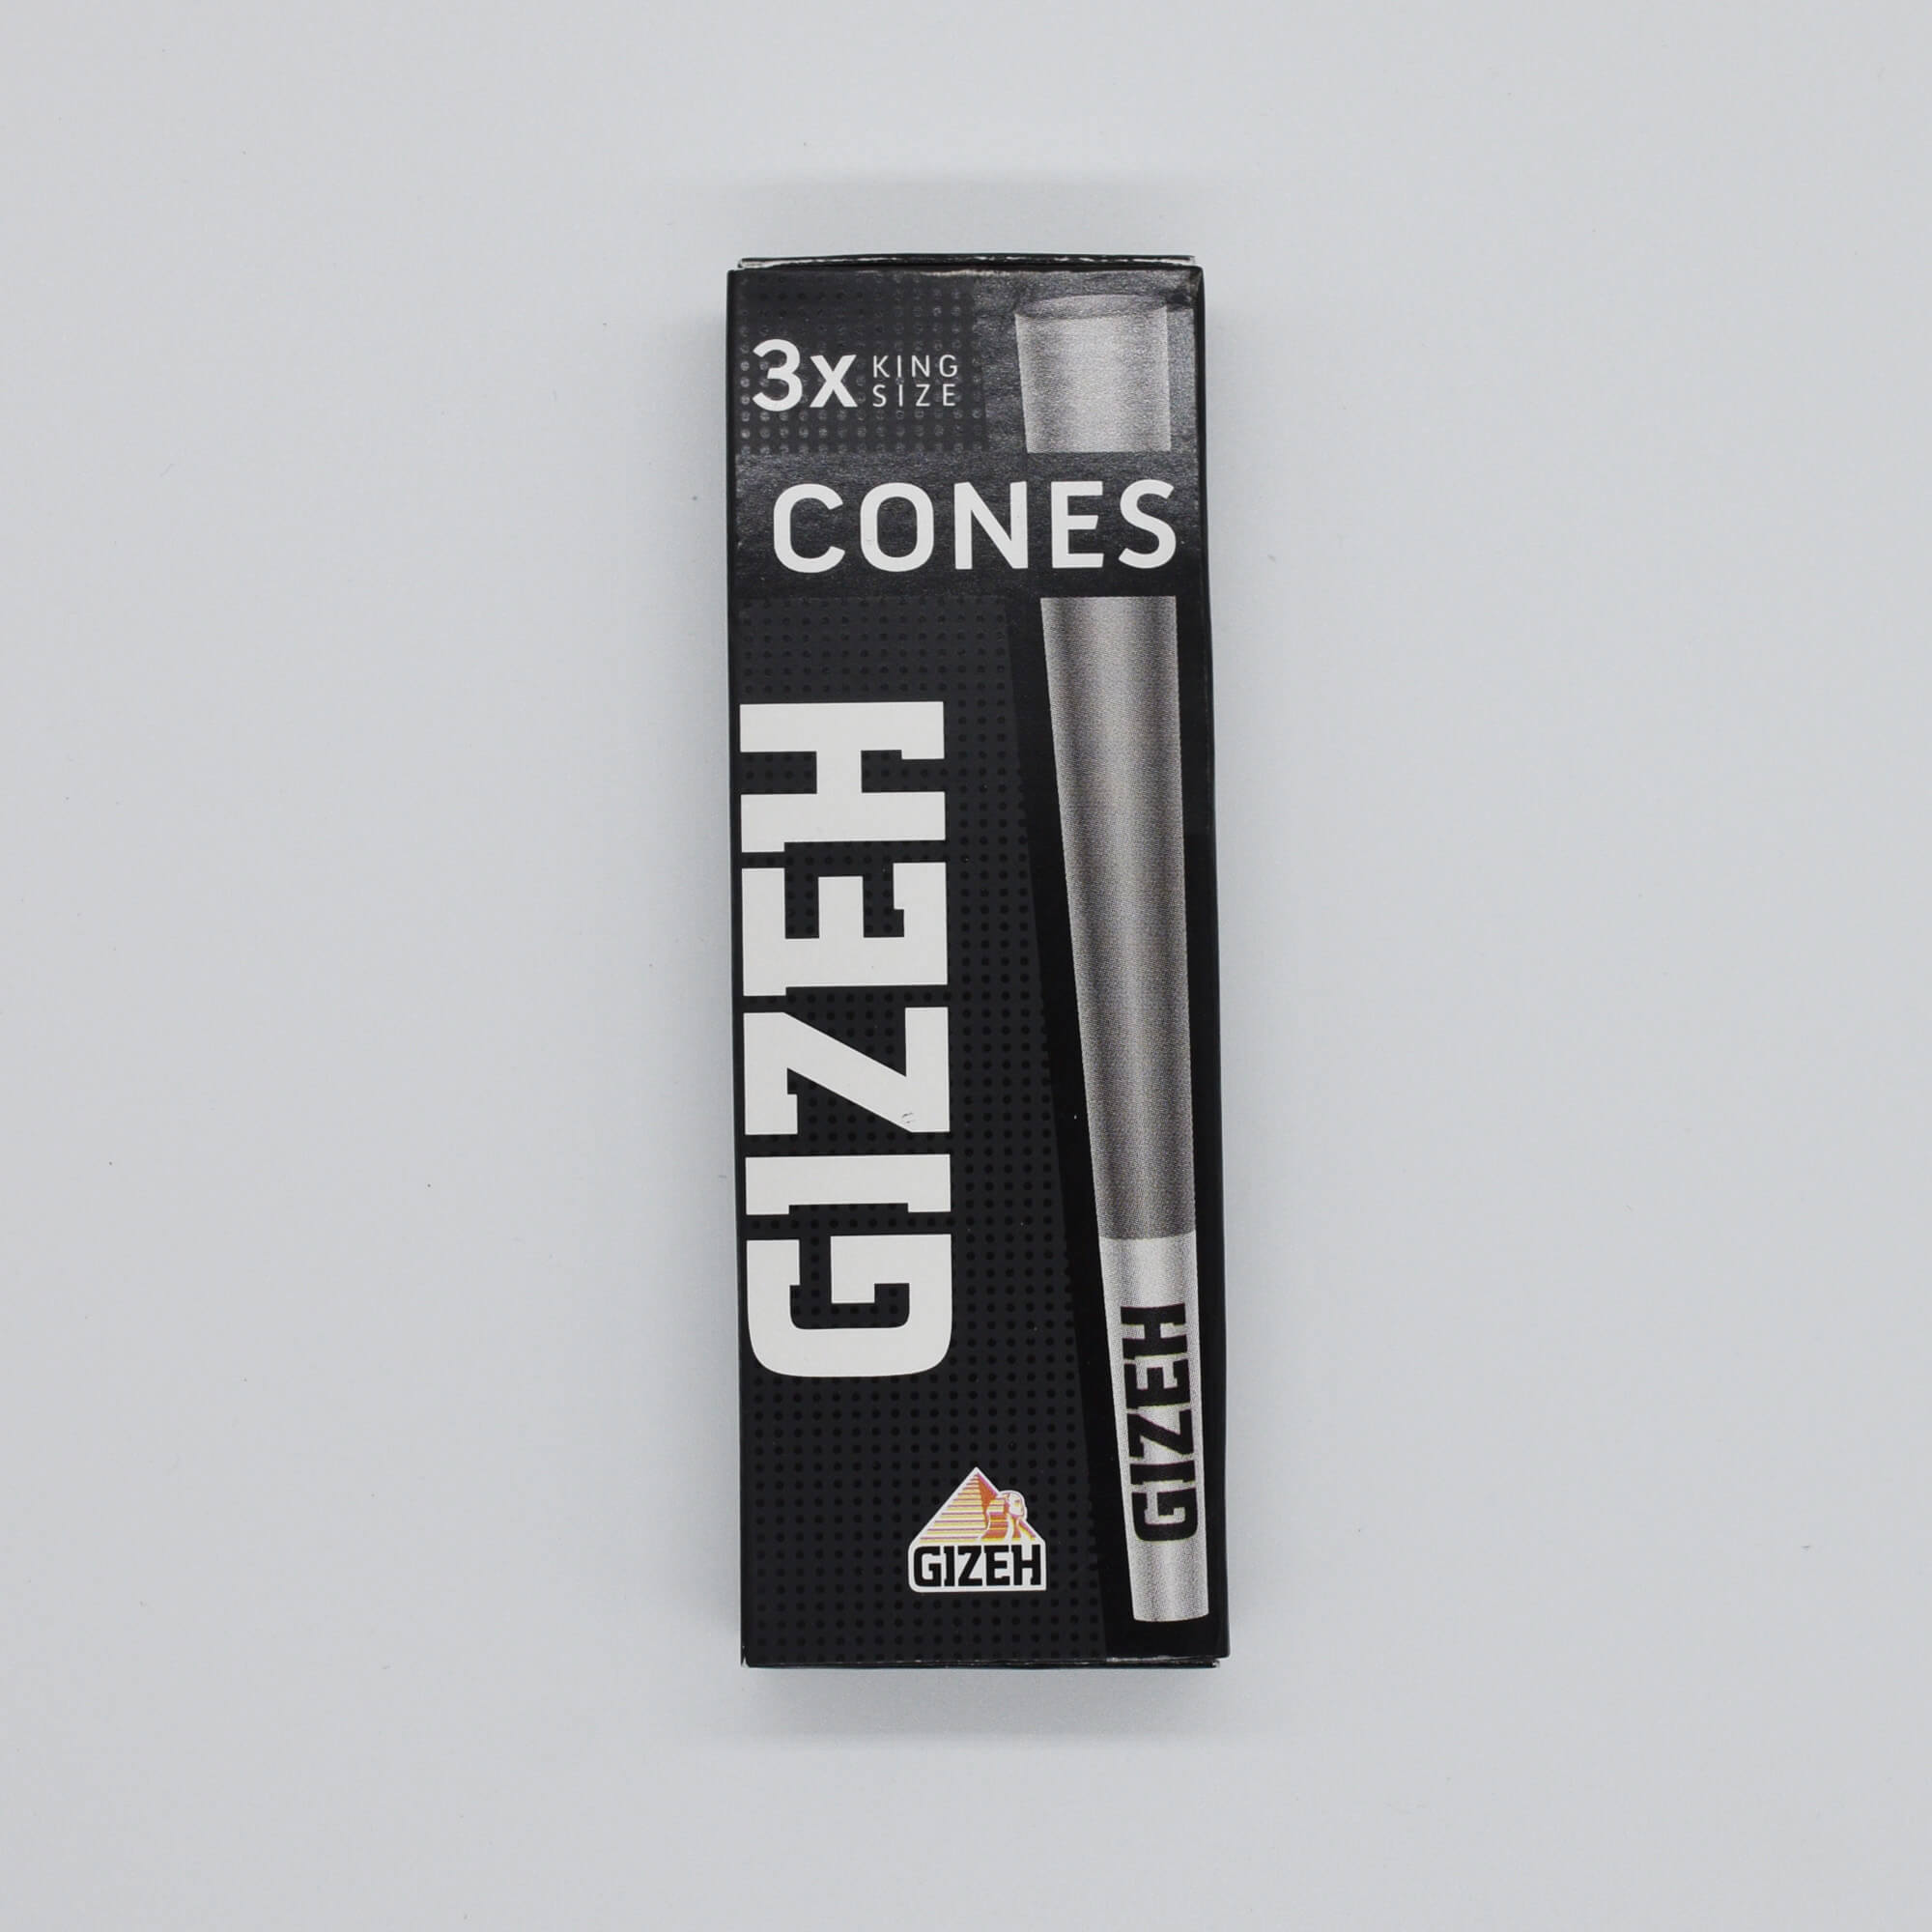 GIZEH Black King Size Cones 3 Stk